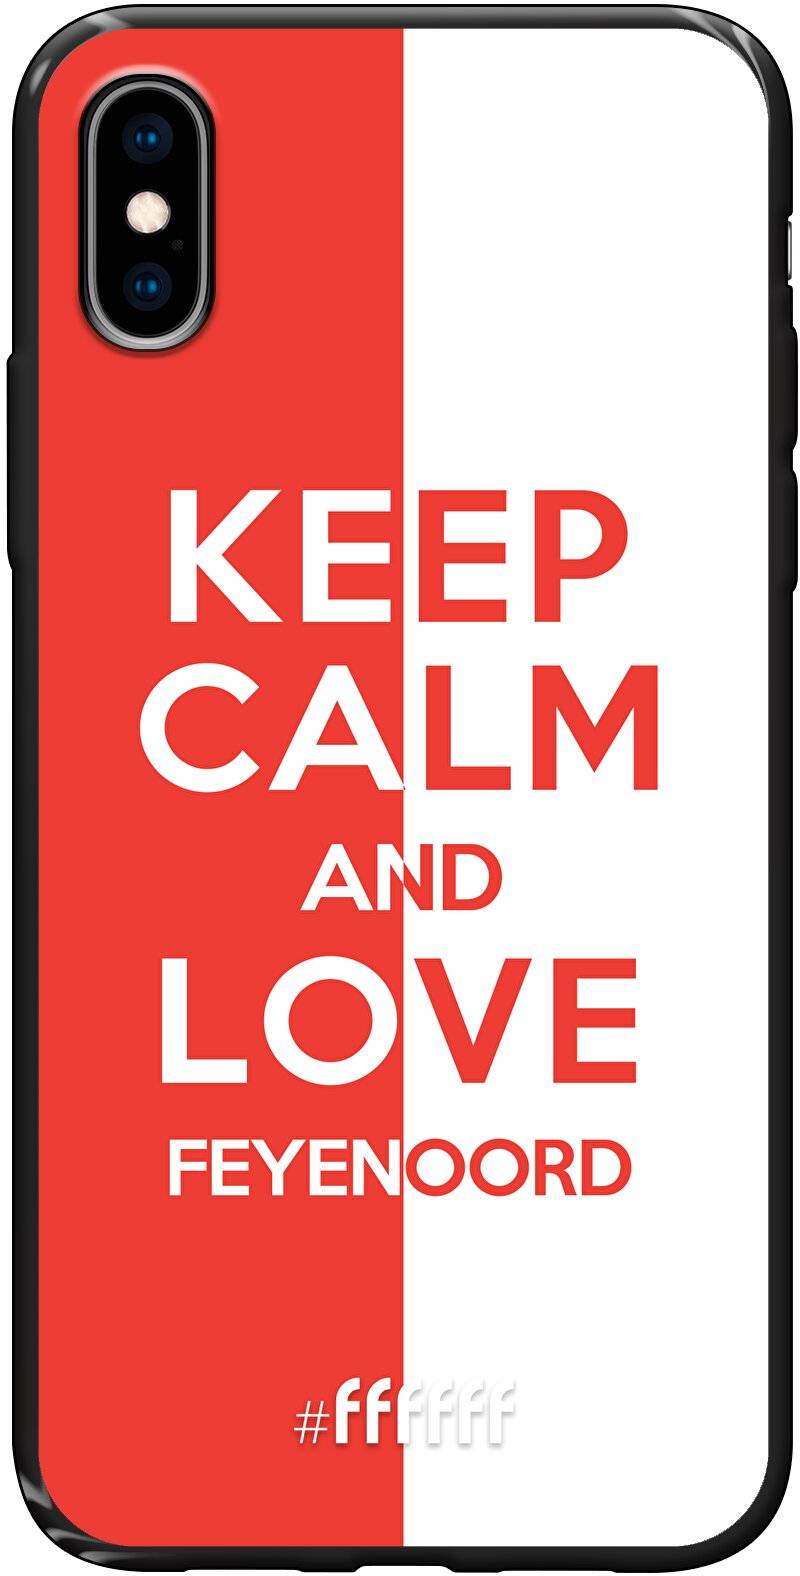 Feyenoord - Keep calm iPhone X